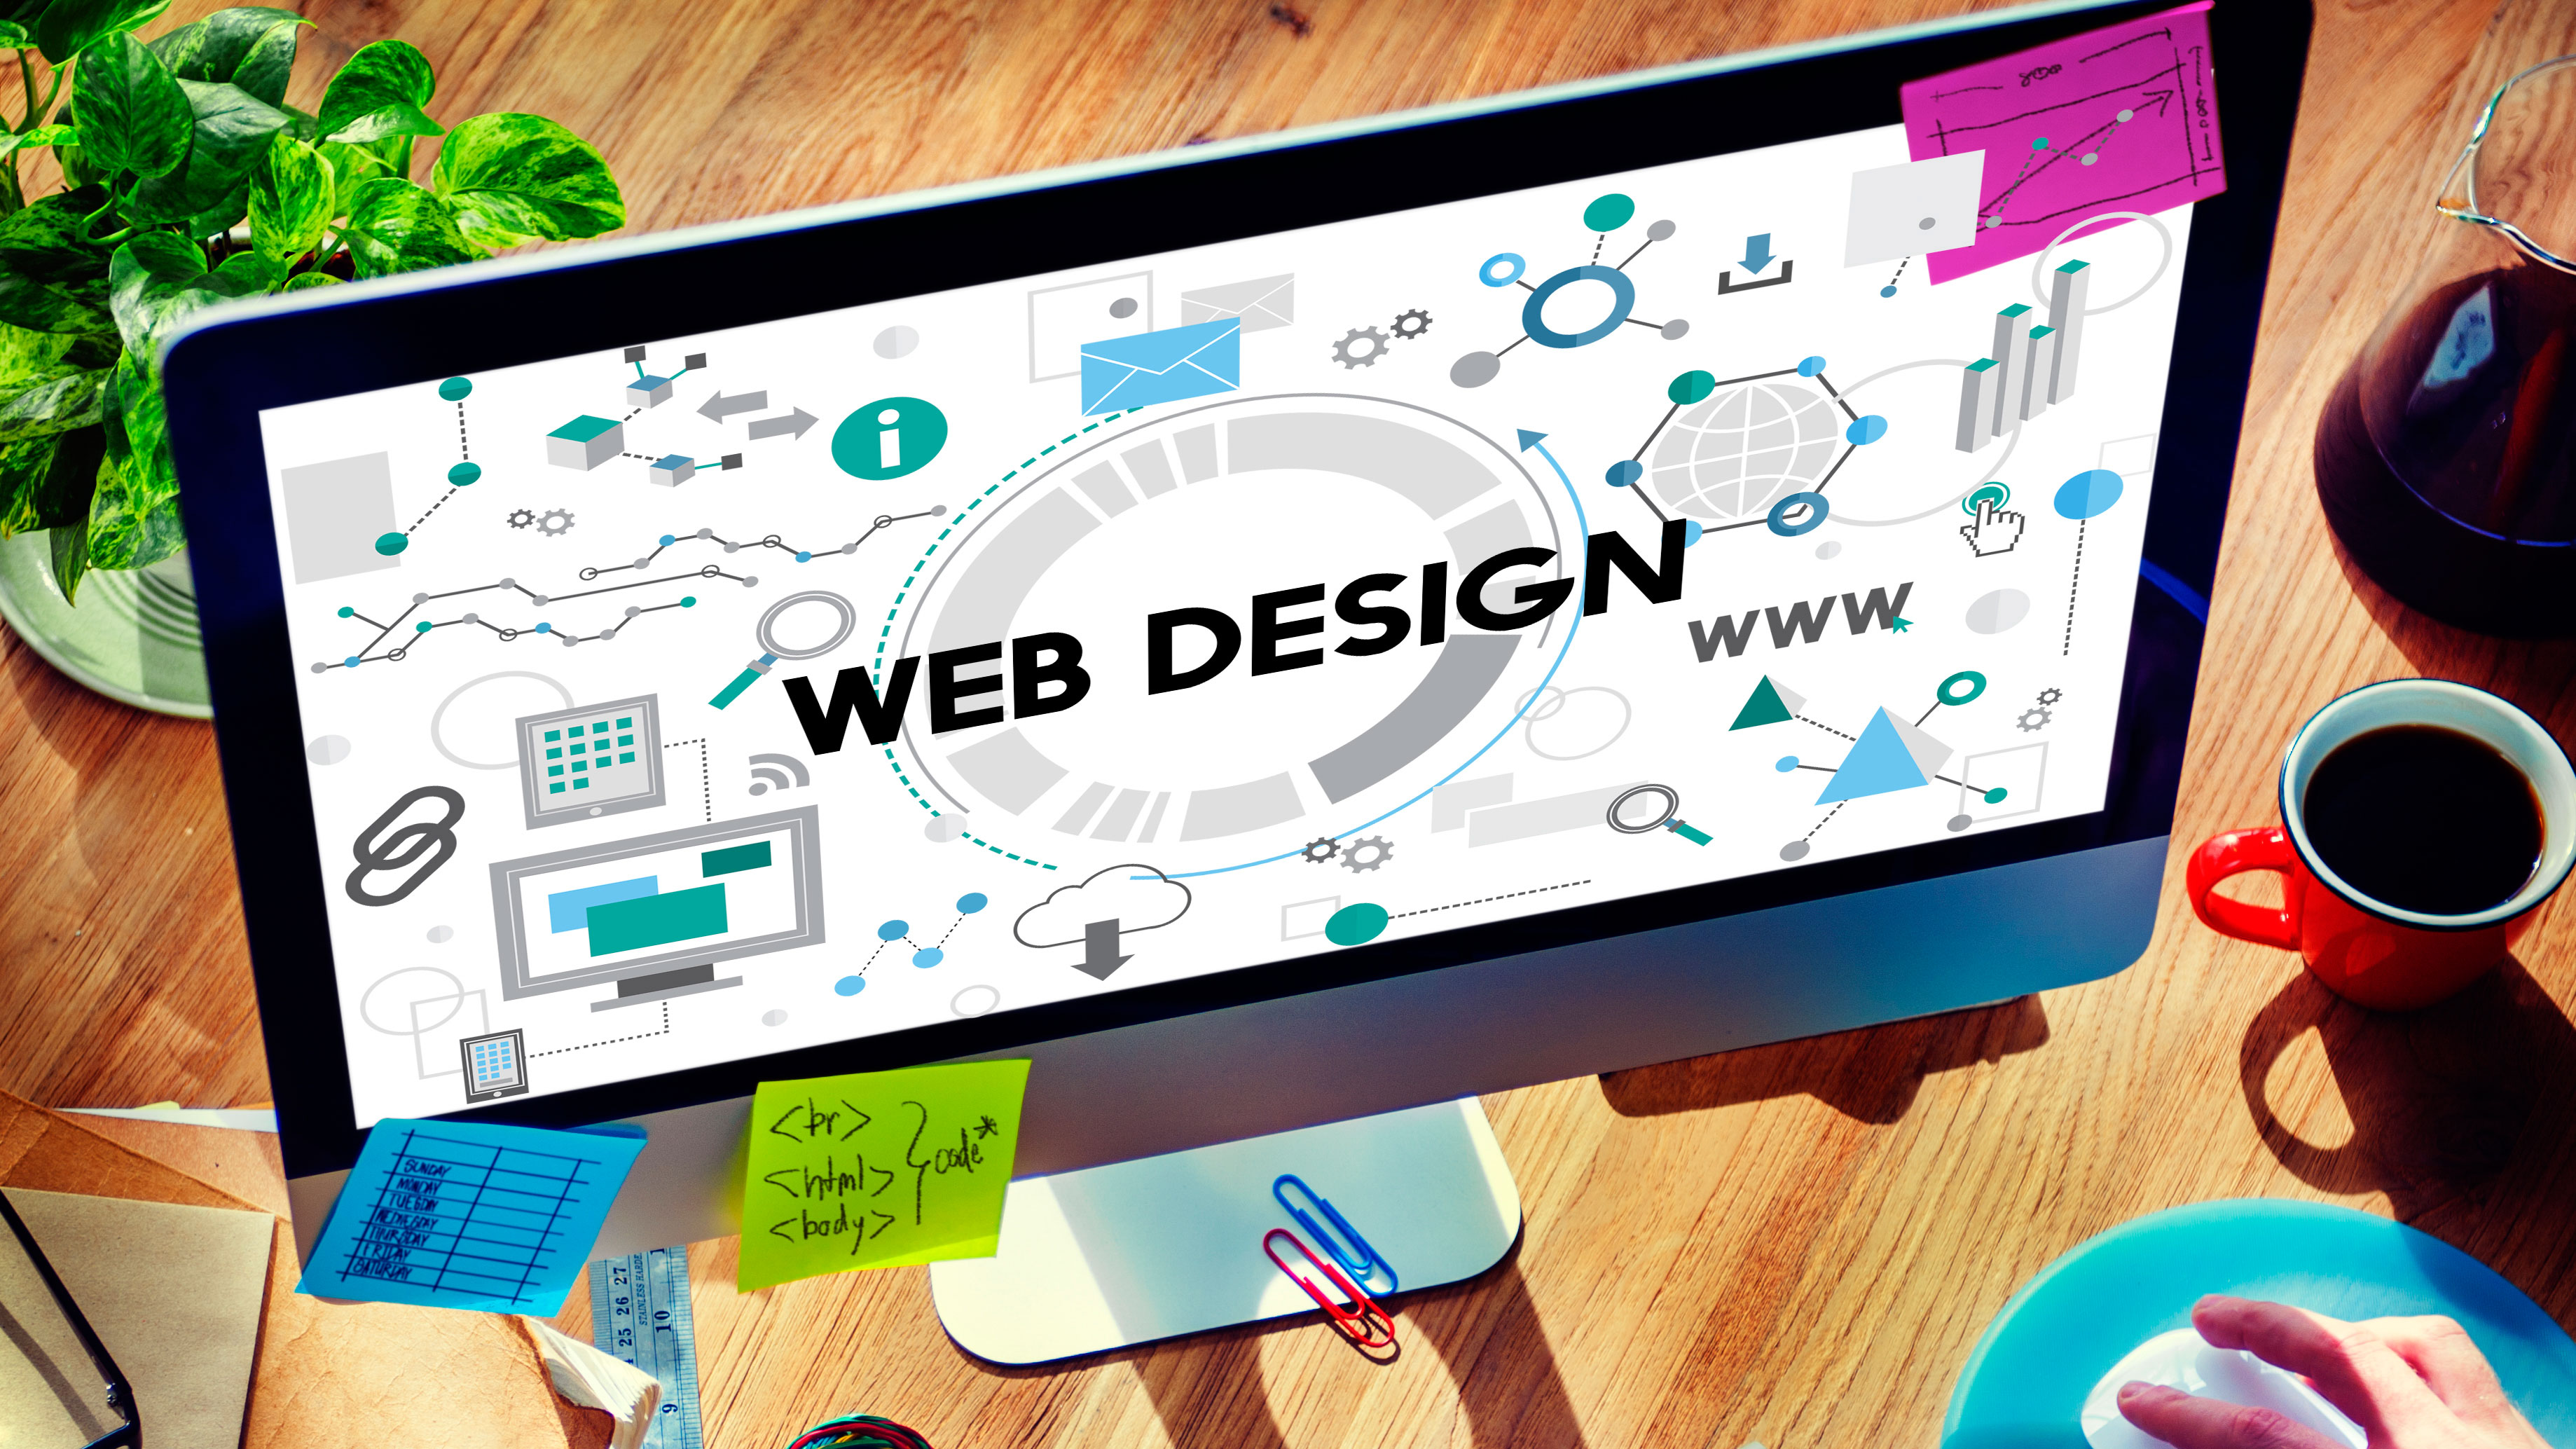 Web Designing Services in Hyderabad